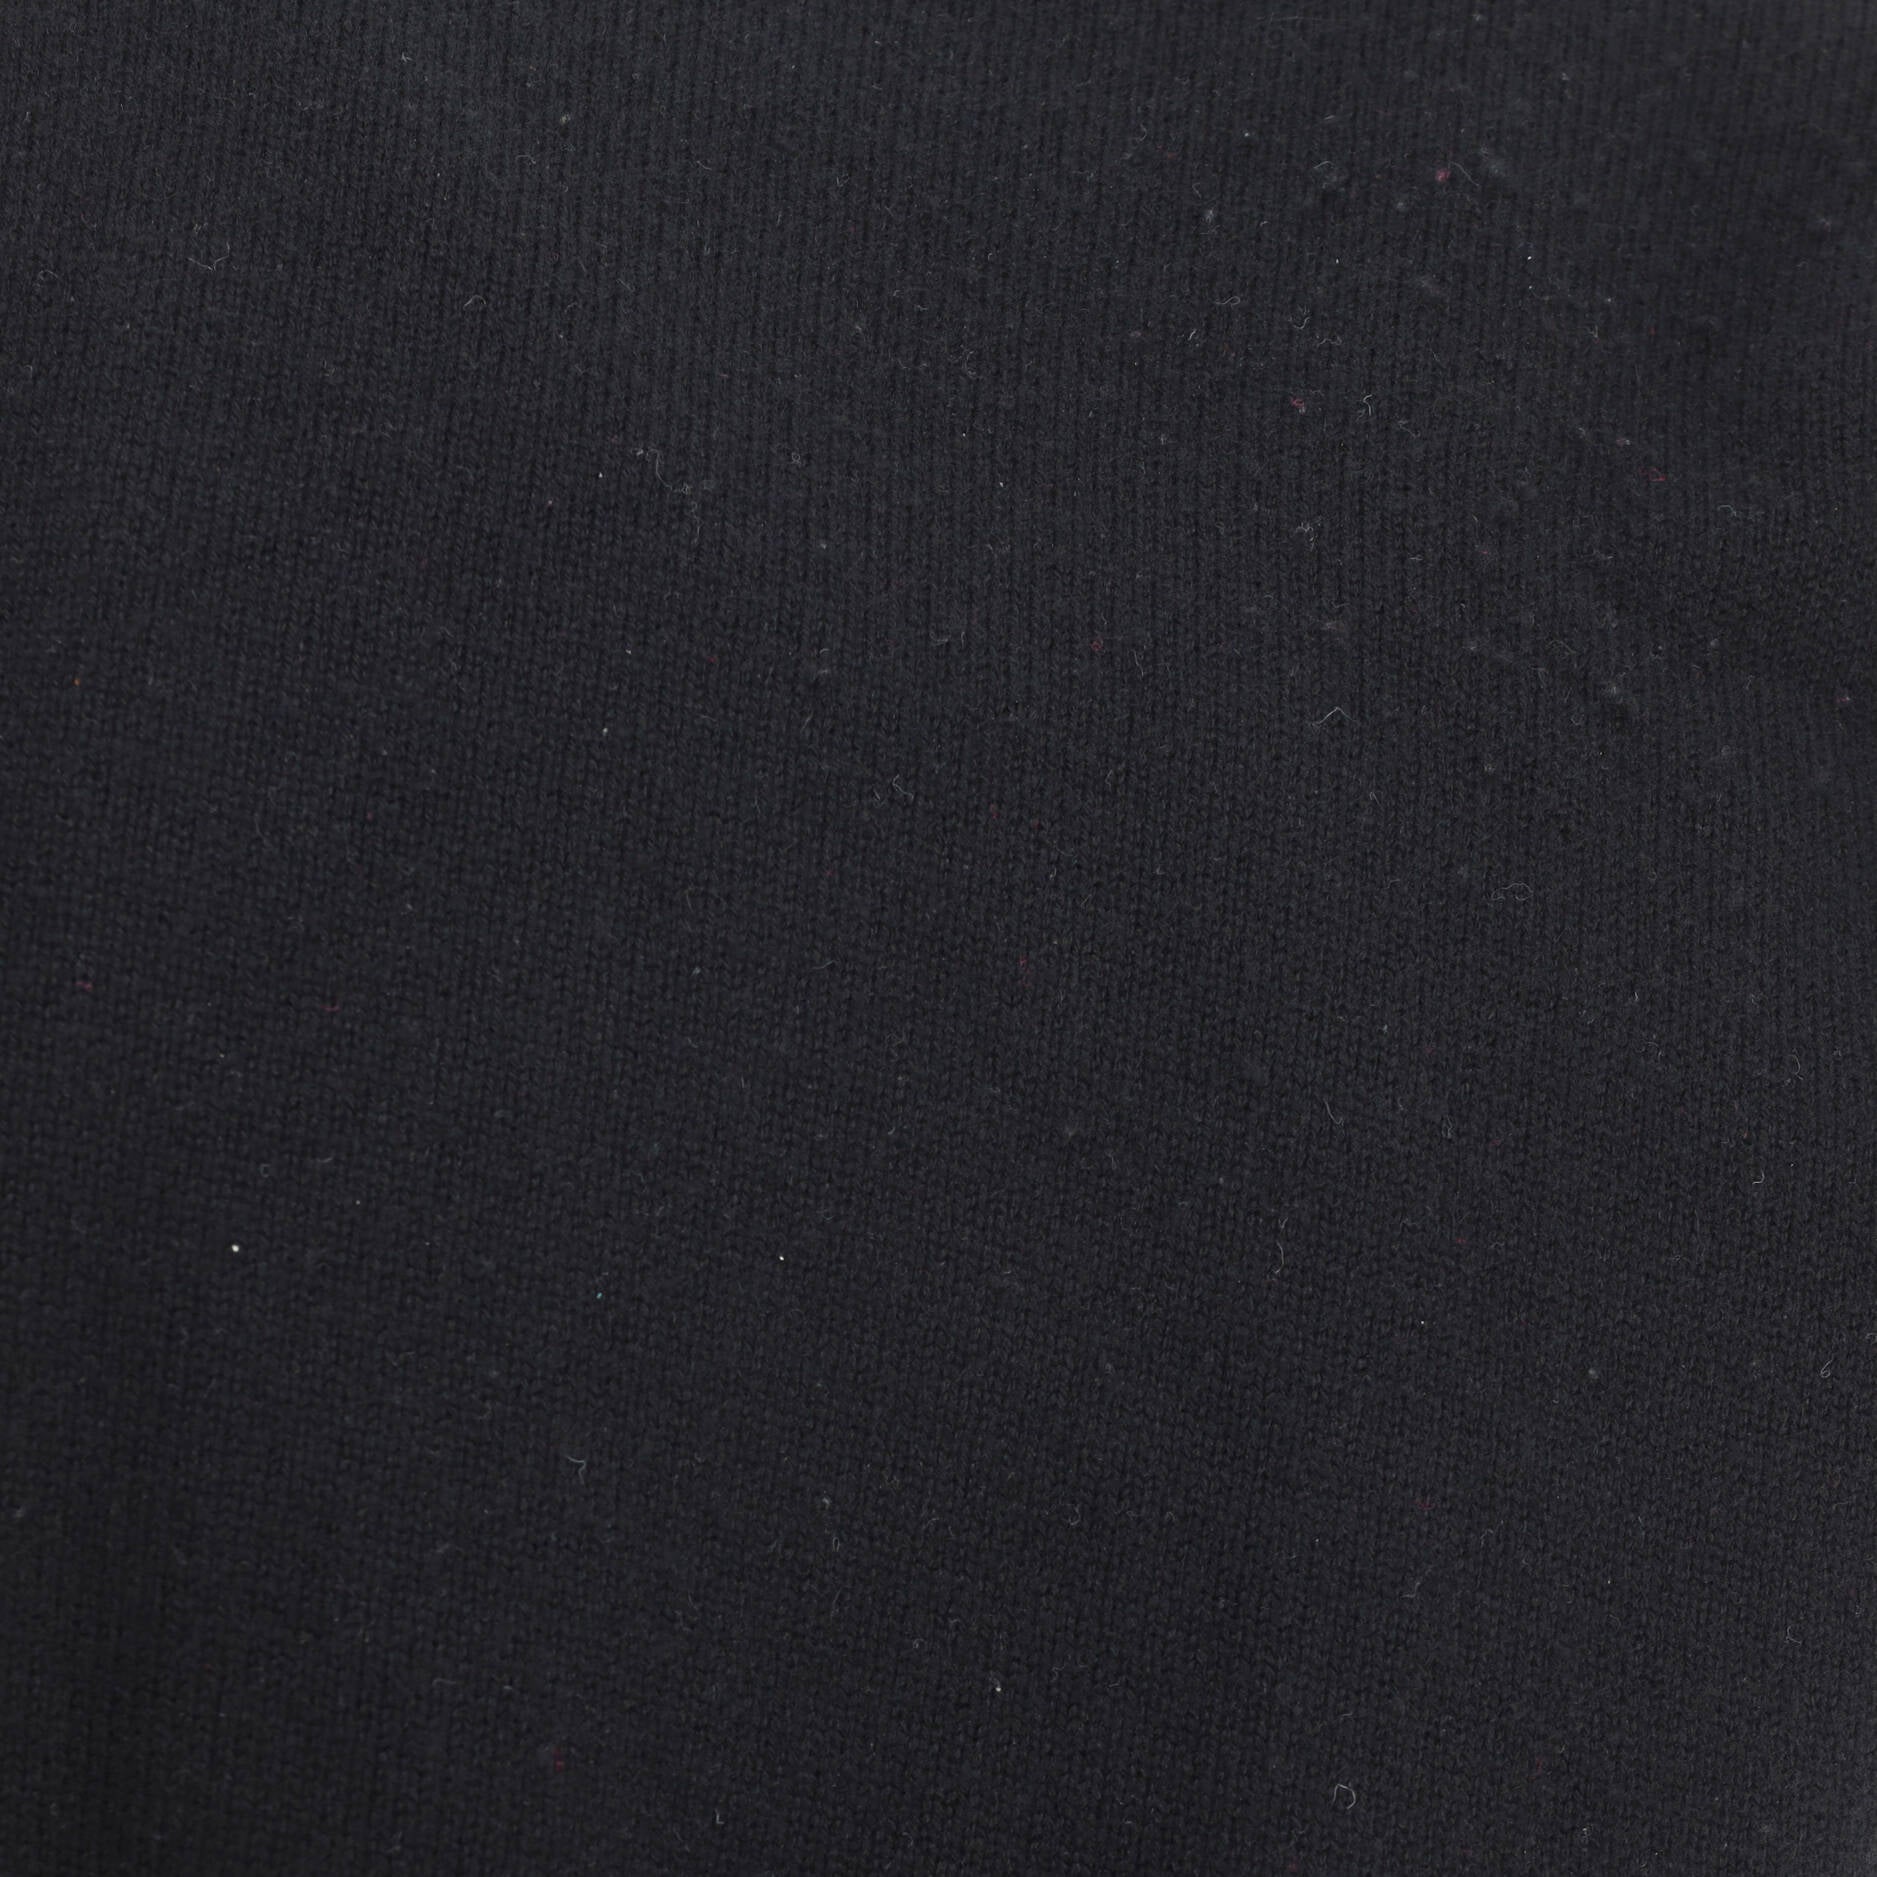 Louis Vuitton Men's Cream Cashmere Half and Half Monogram Crewneck